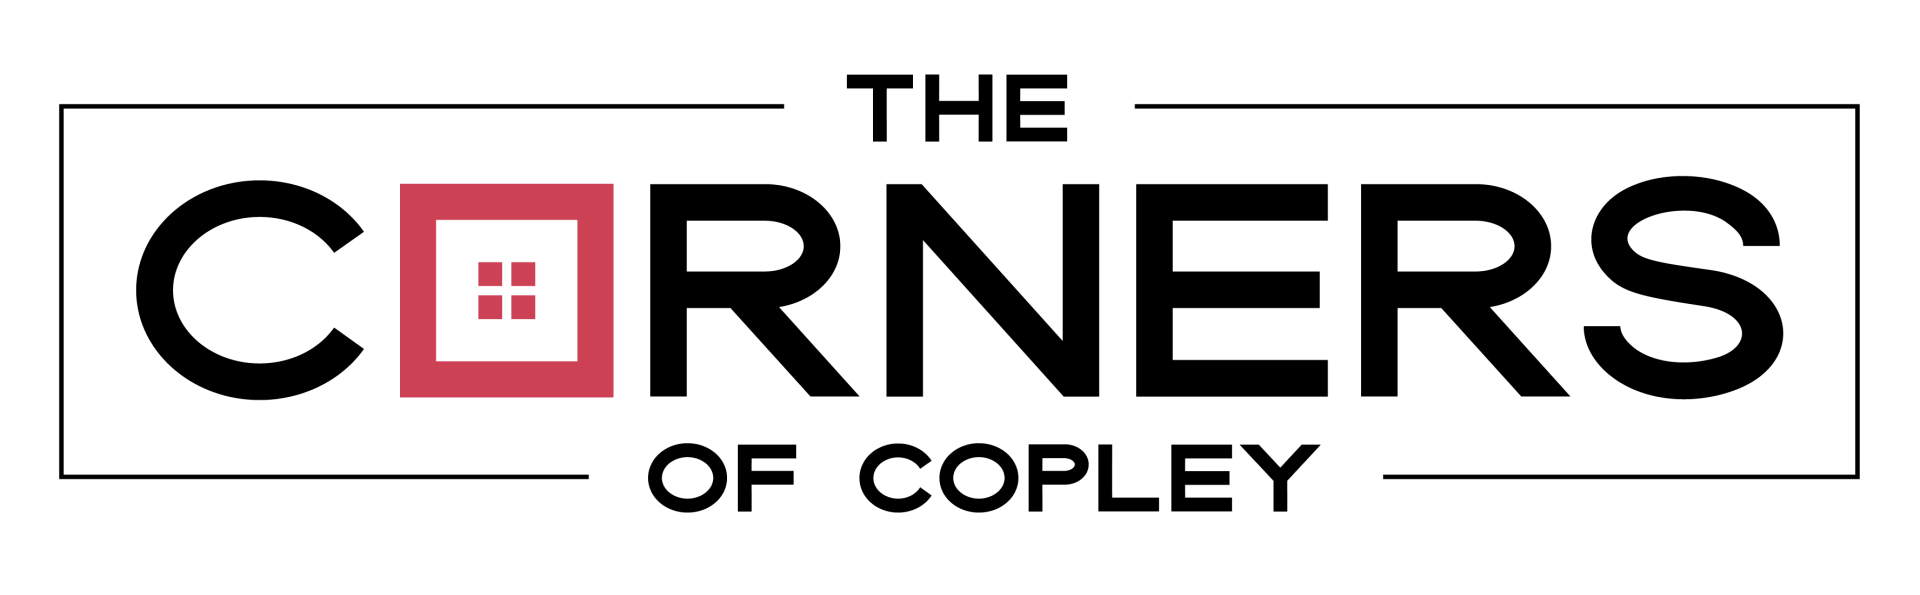 The Corners of Copley Logo